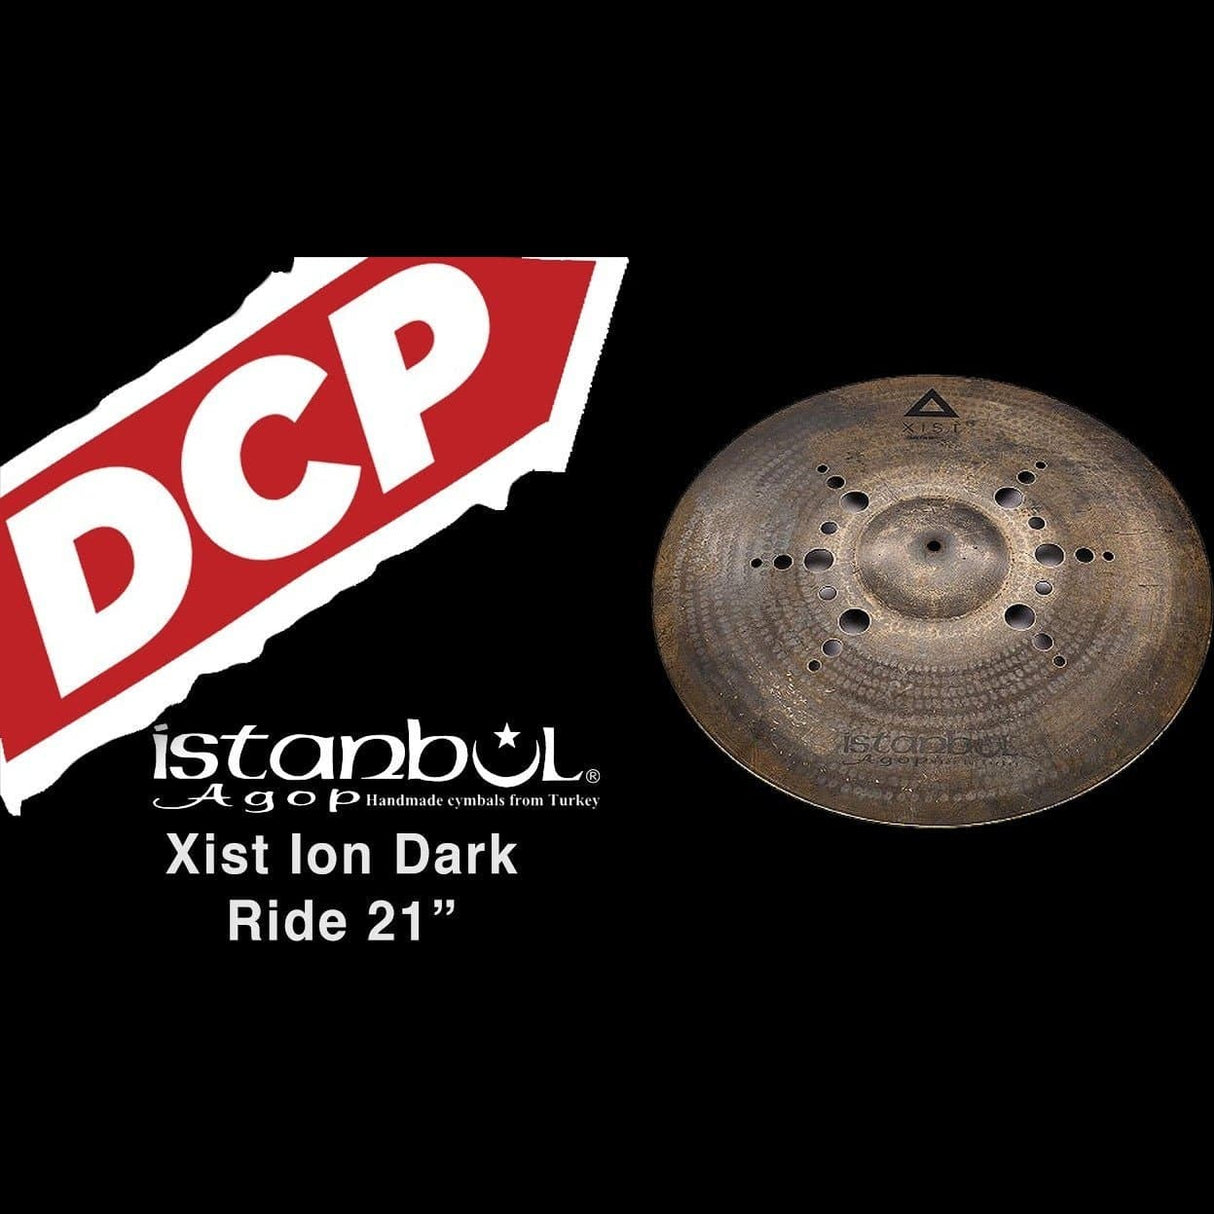 Istanbul Agop Xist Ion Dark Ride Cymbal 21"